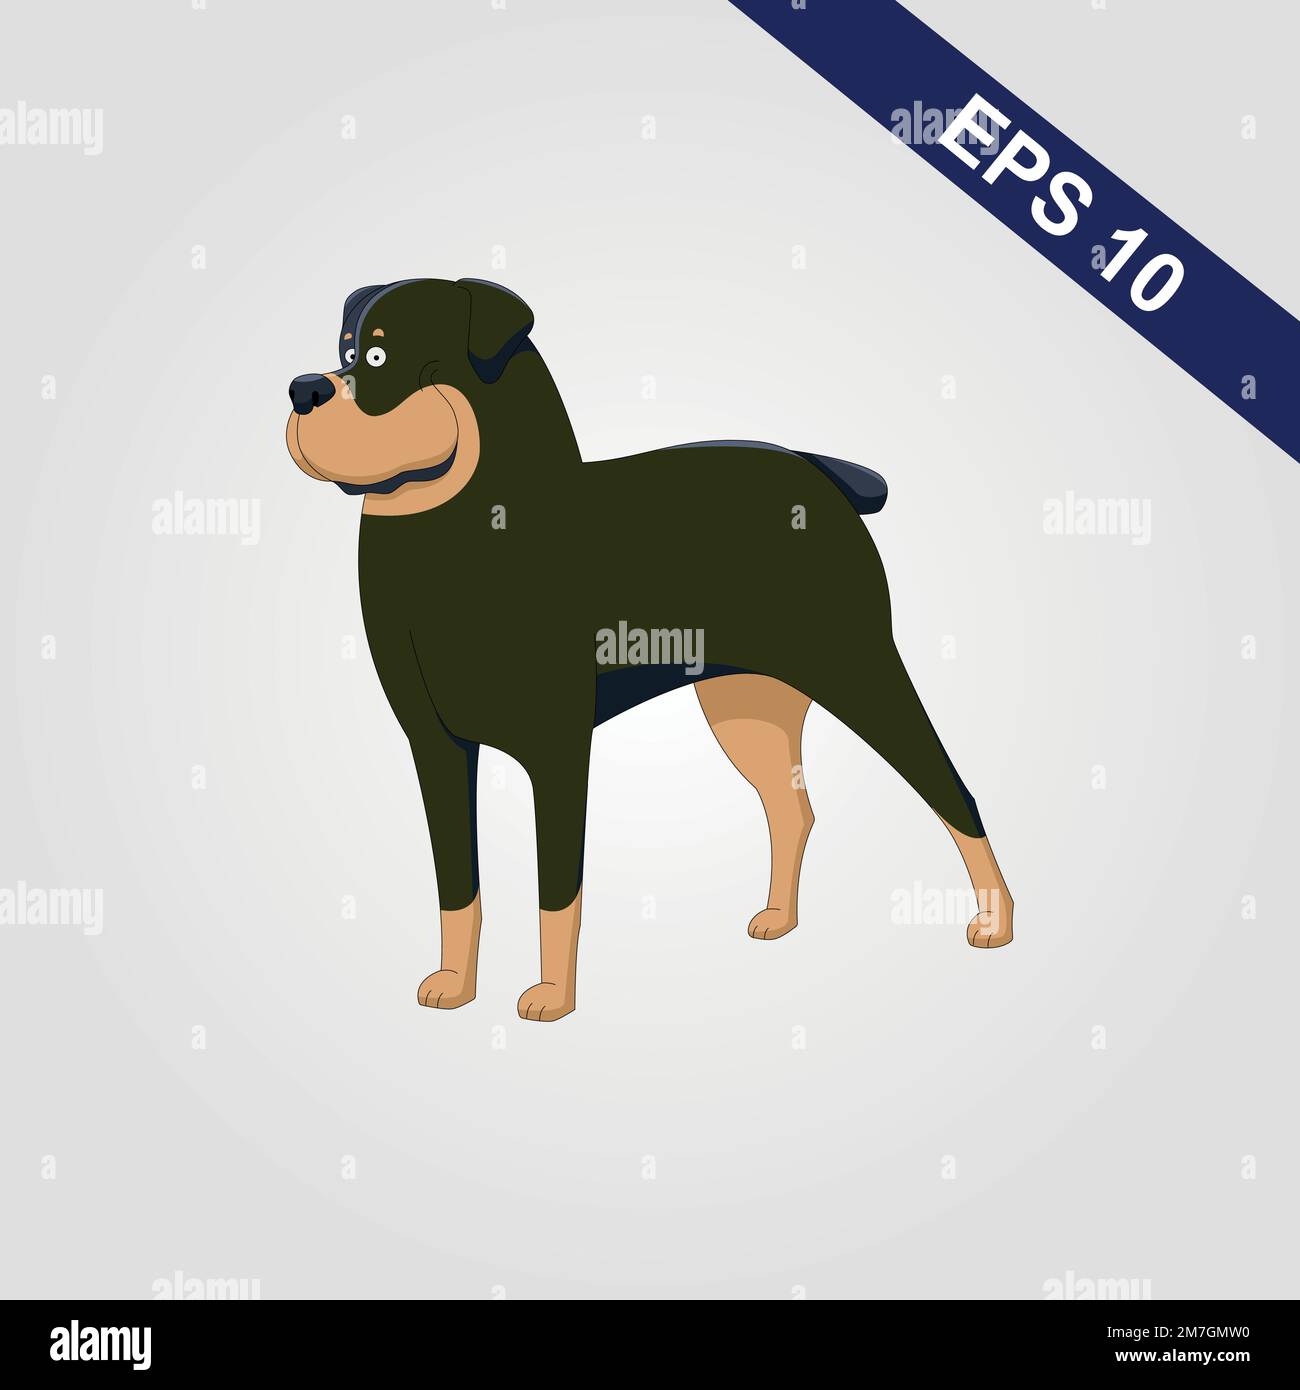 Rottweiler Dog illustrazione vettoriale eretta isolata con ombra. Illustrazione Vettoriale